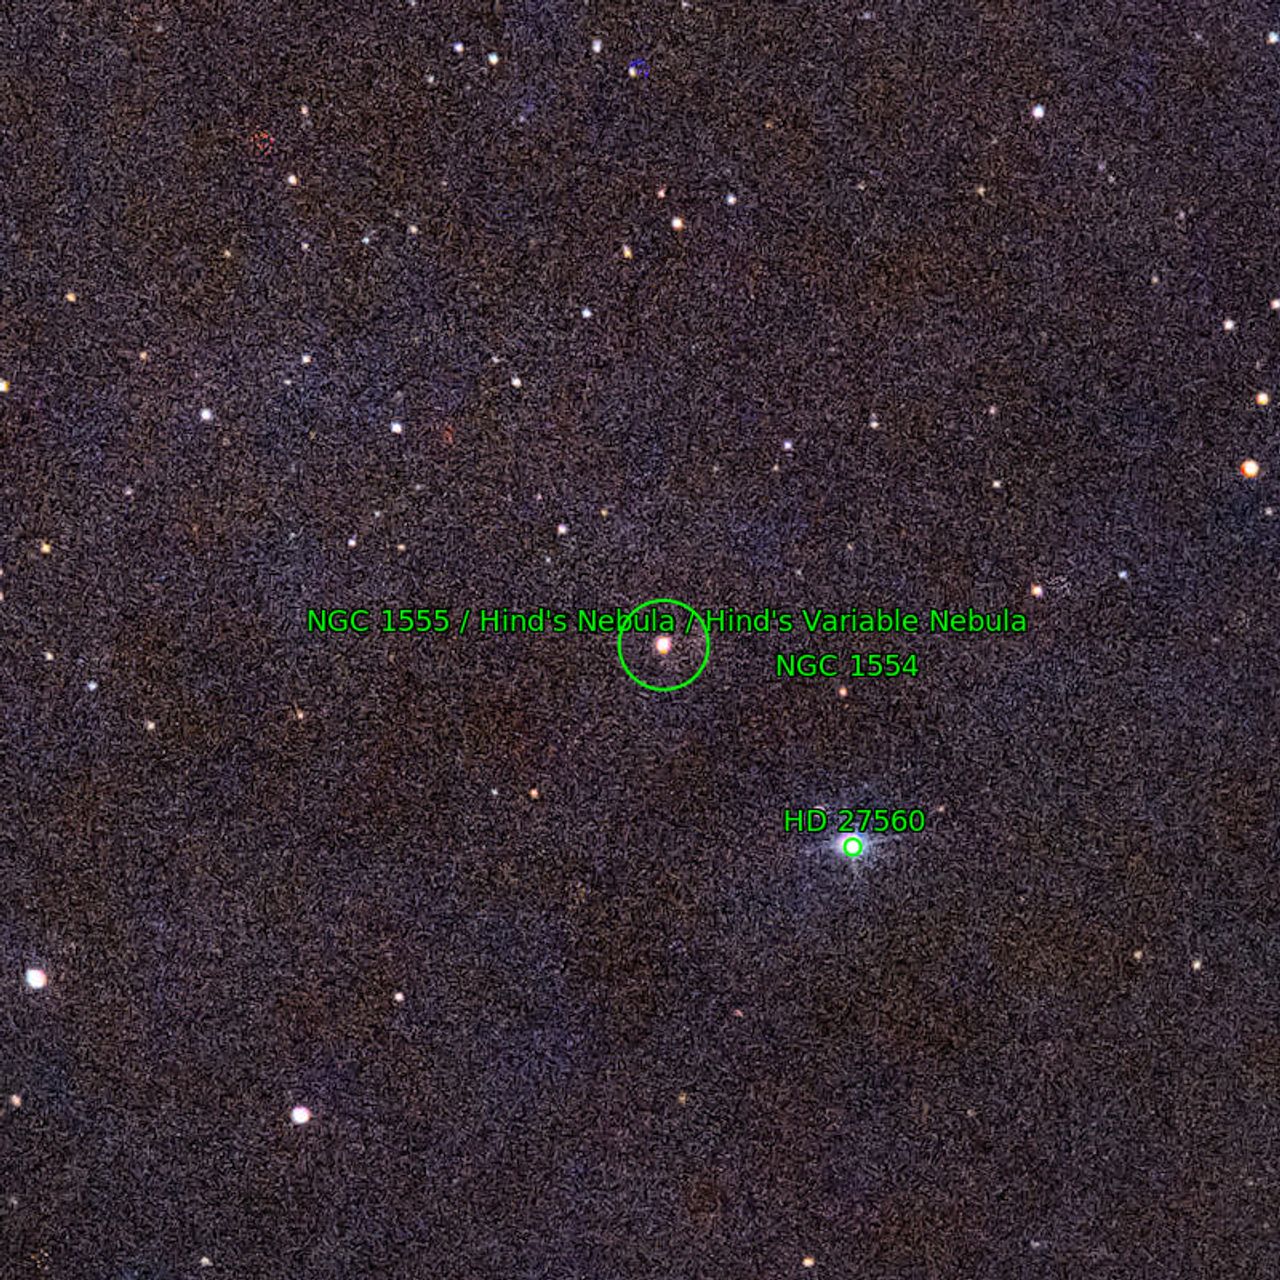 Annotation around NGC1555